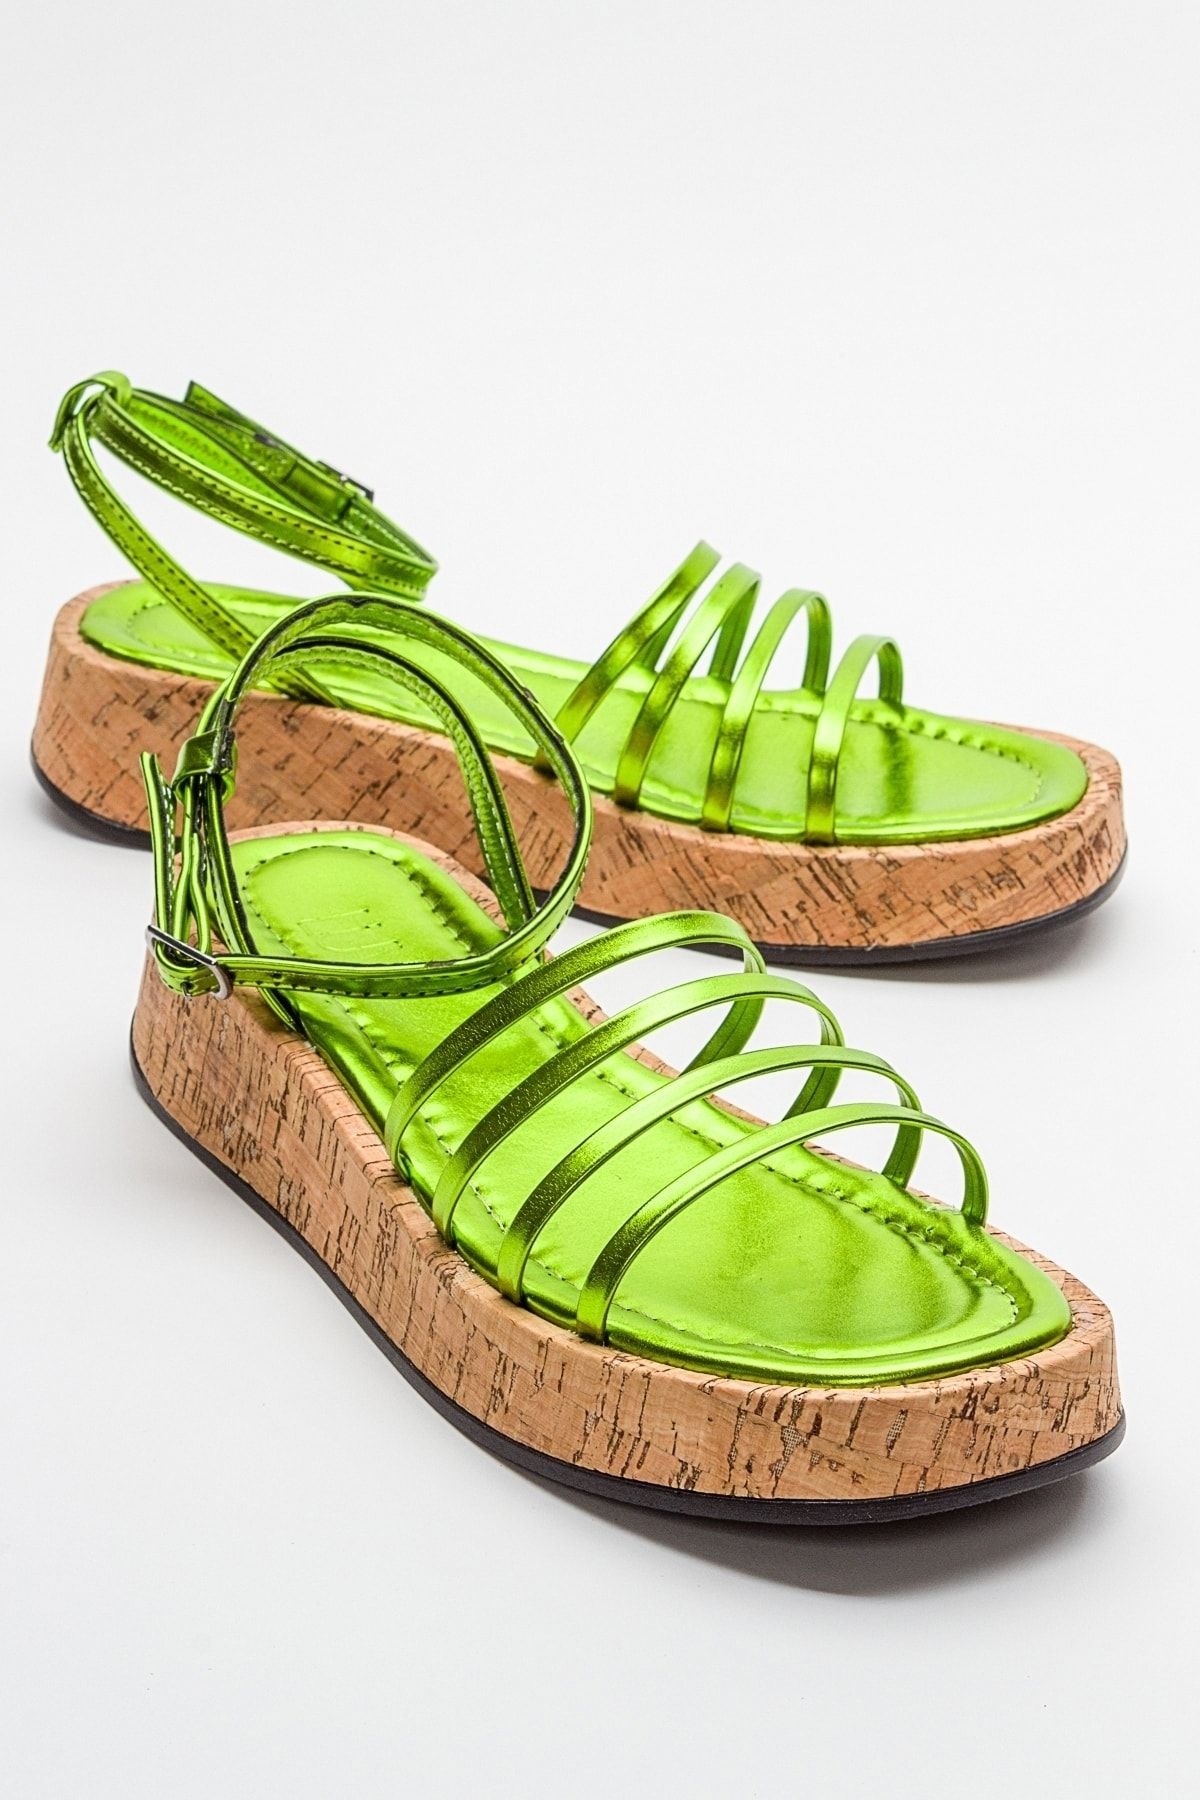 luvishoes ANGELA Metalik Yeşil Kadın Sandalet